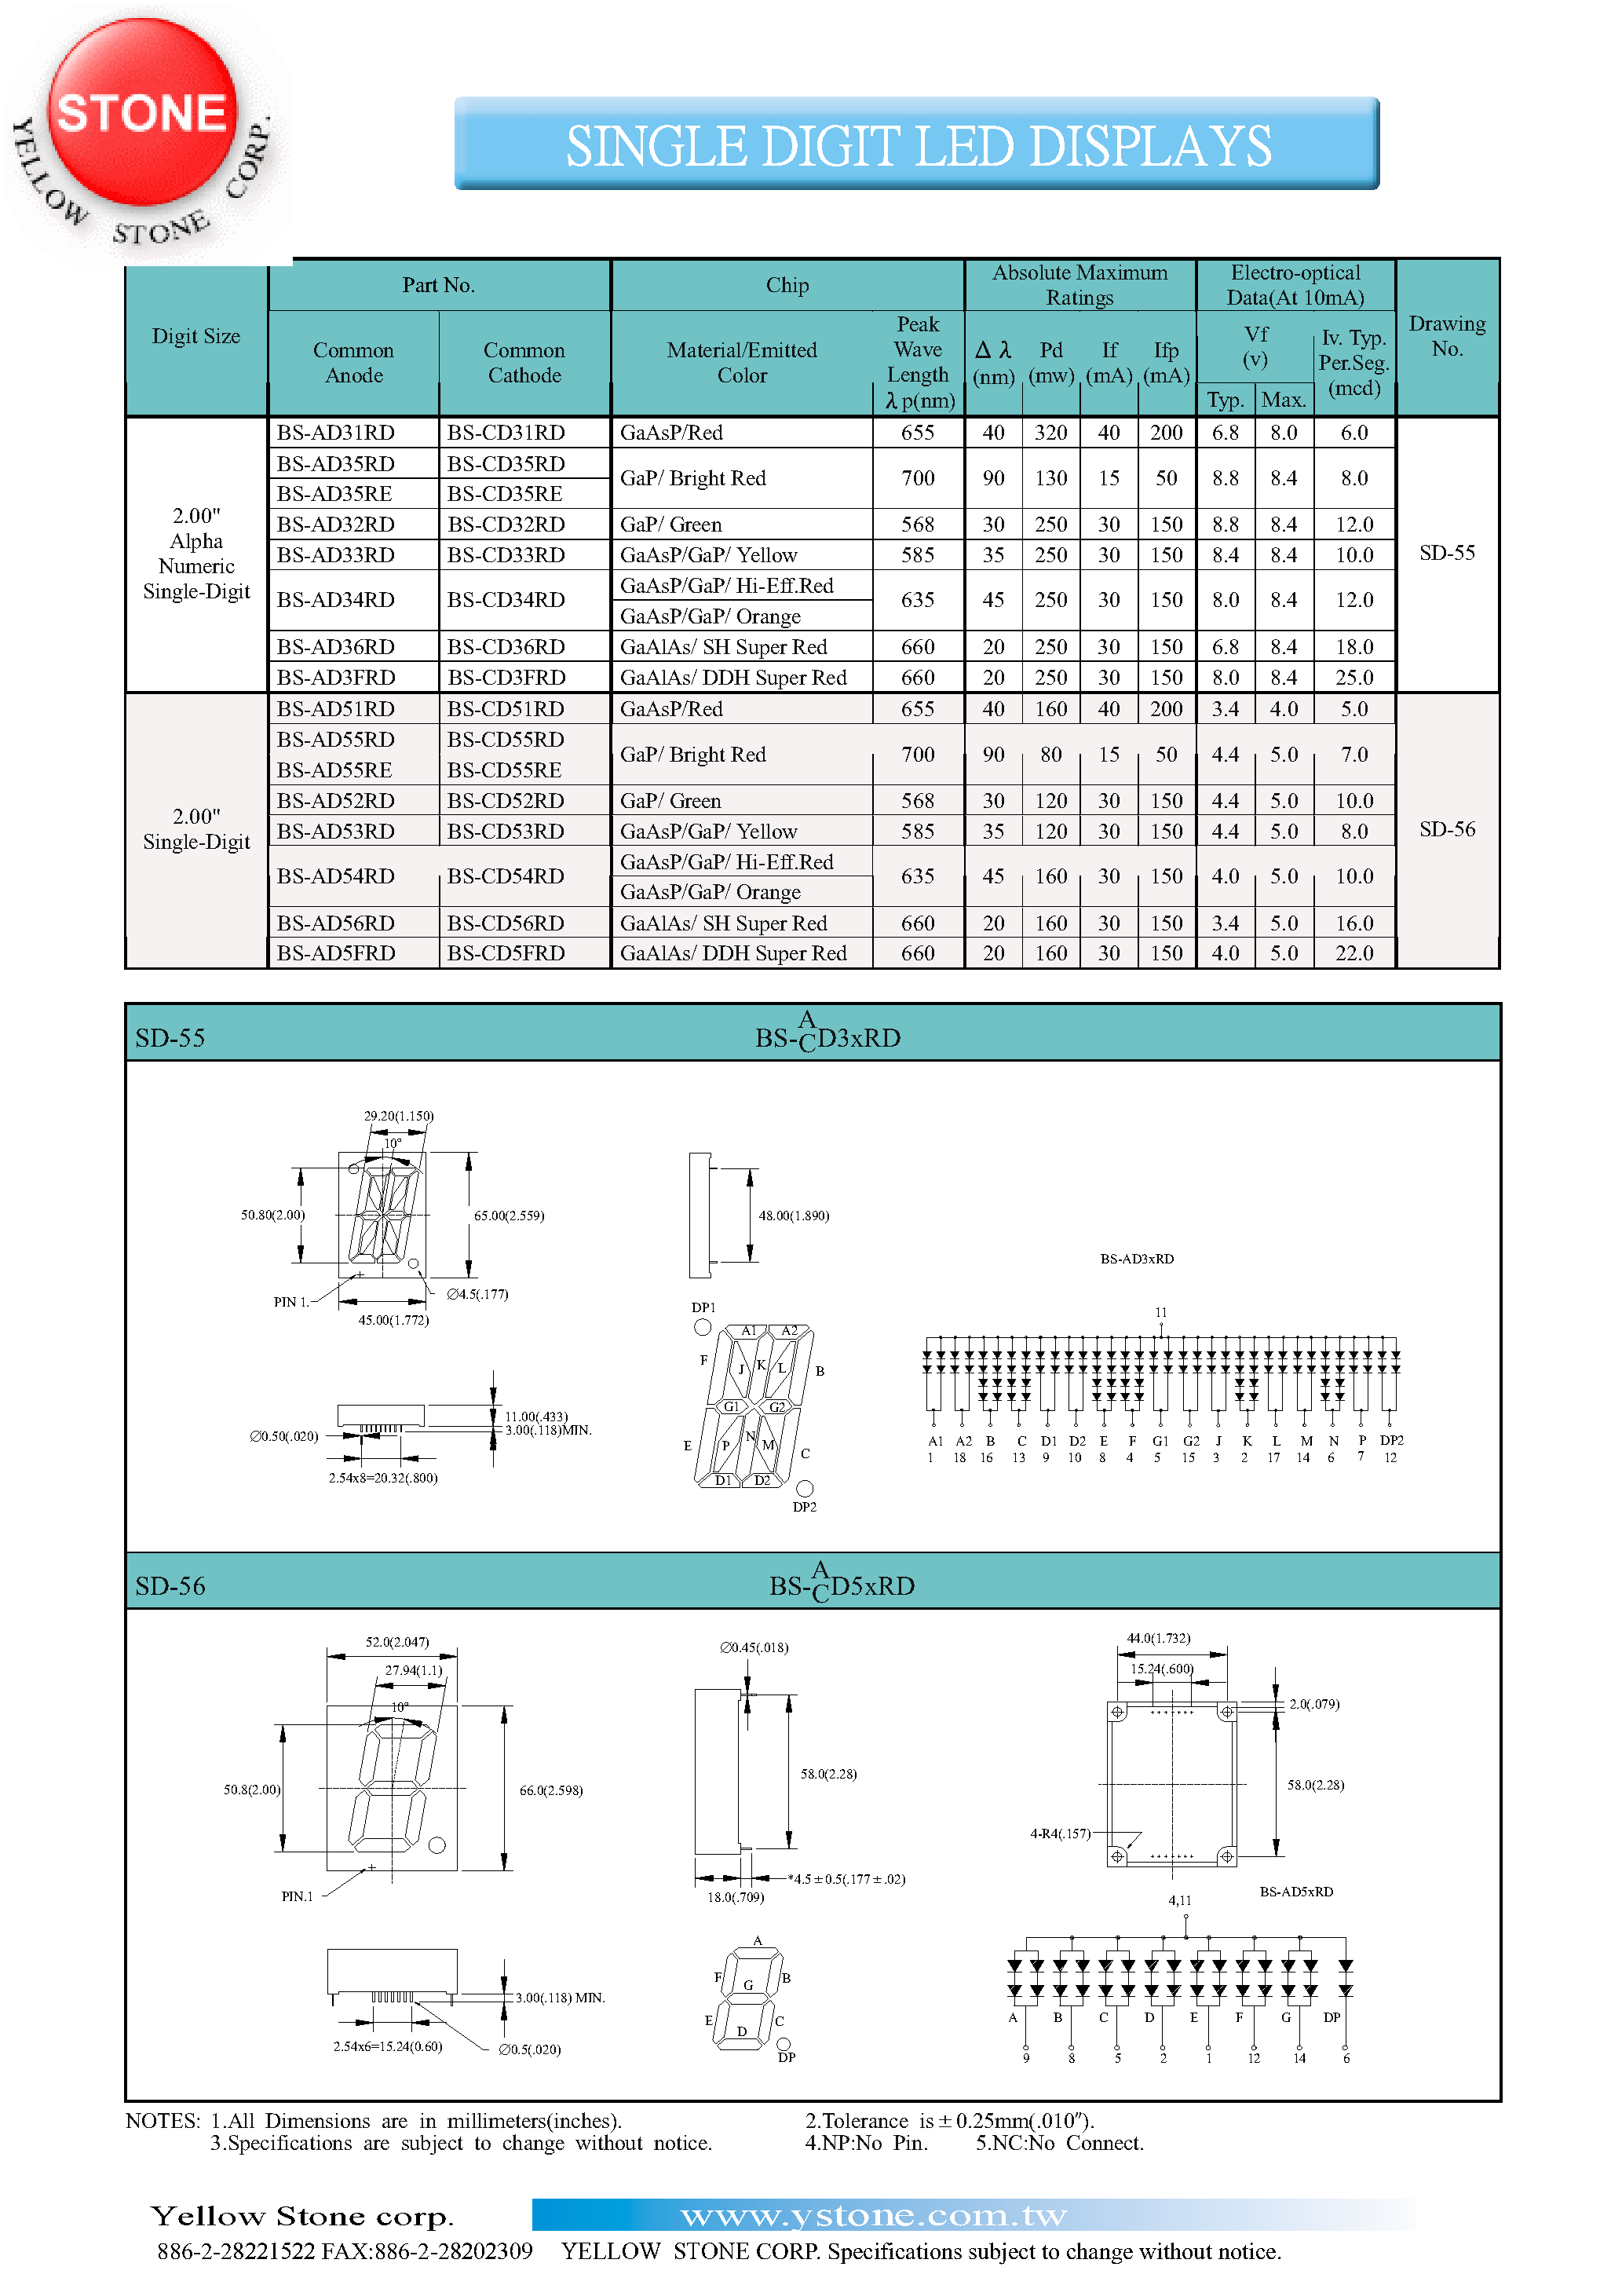 Datasheet BS-AD35RD - SINGLE DIGIT LED DISPLAYS page 1